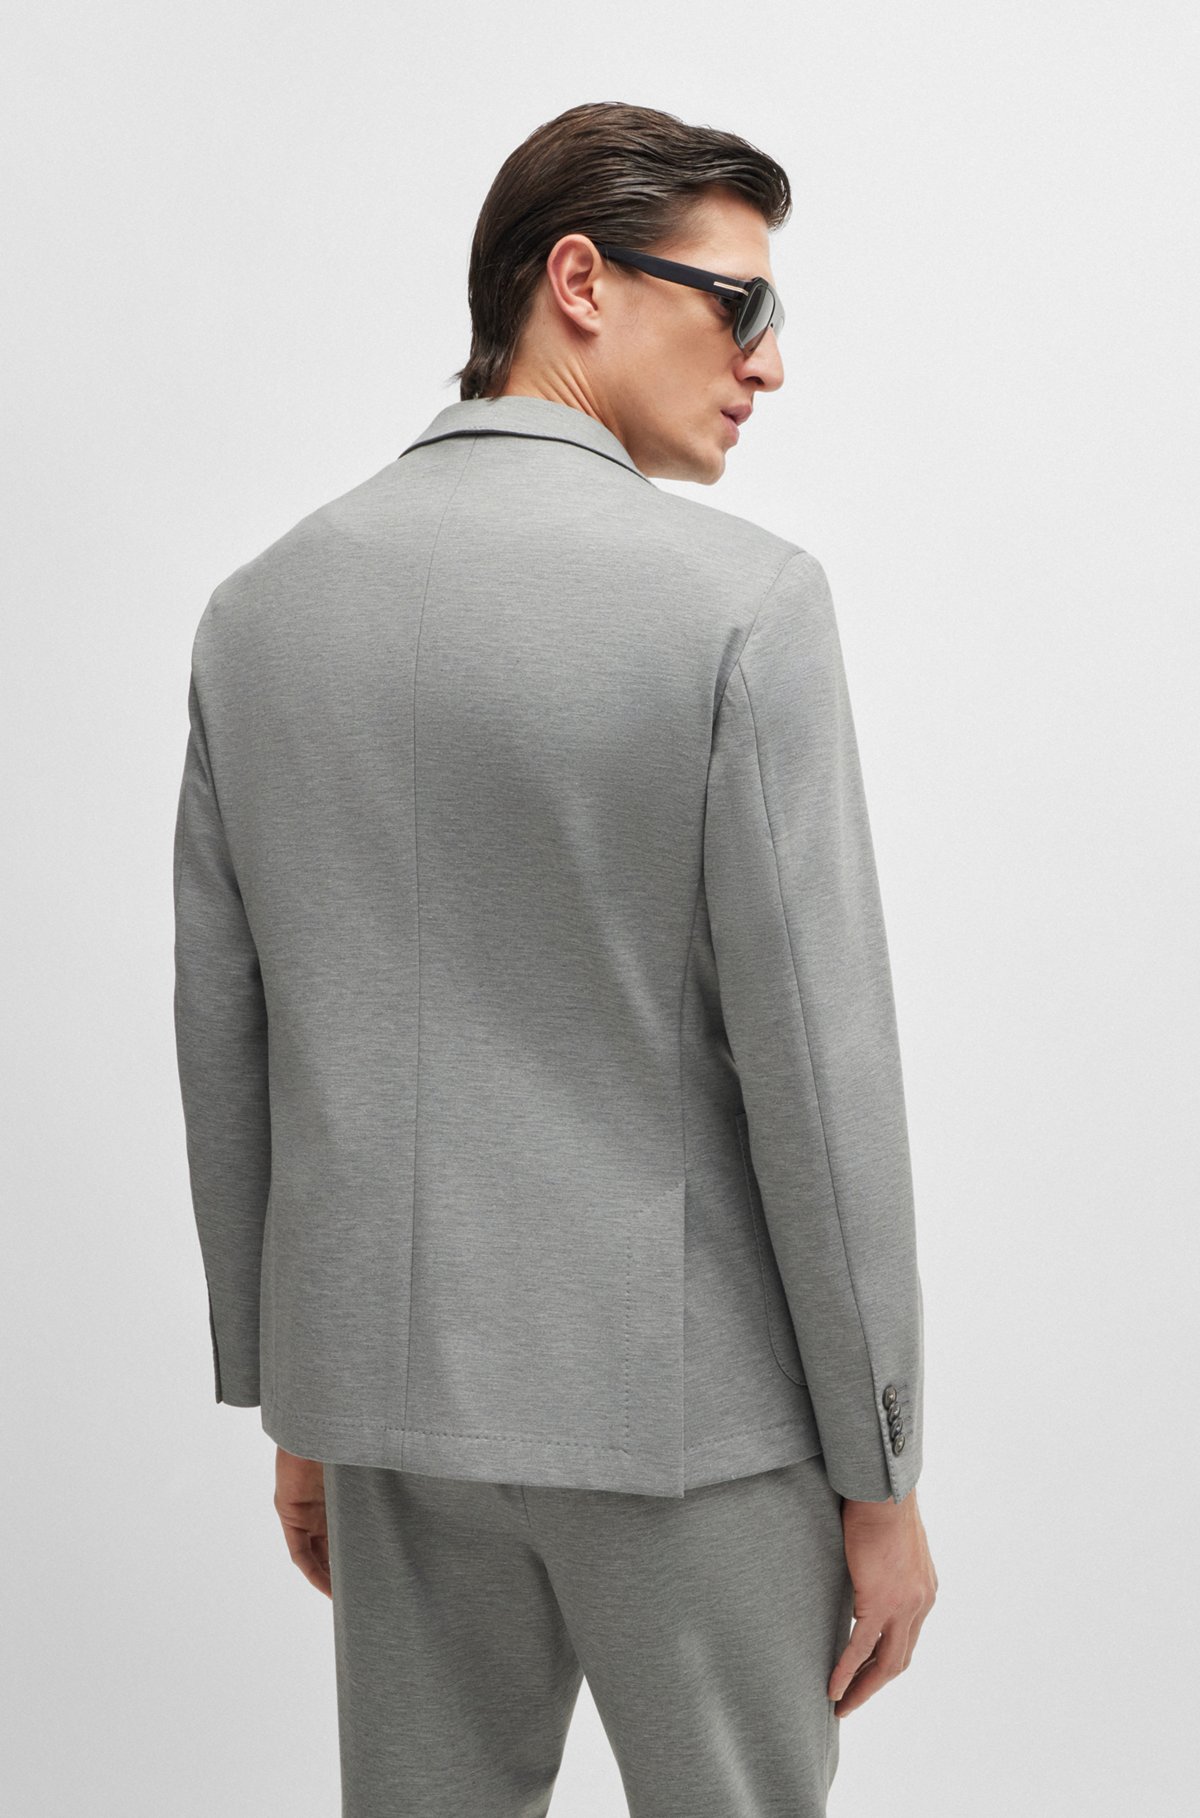 Slim-fit jacket in melange interlock jersey, Grey